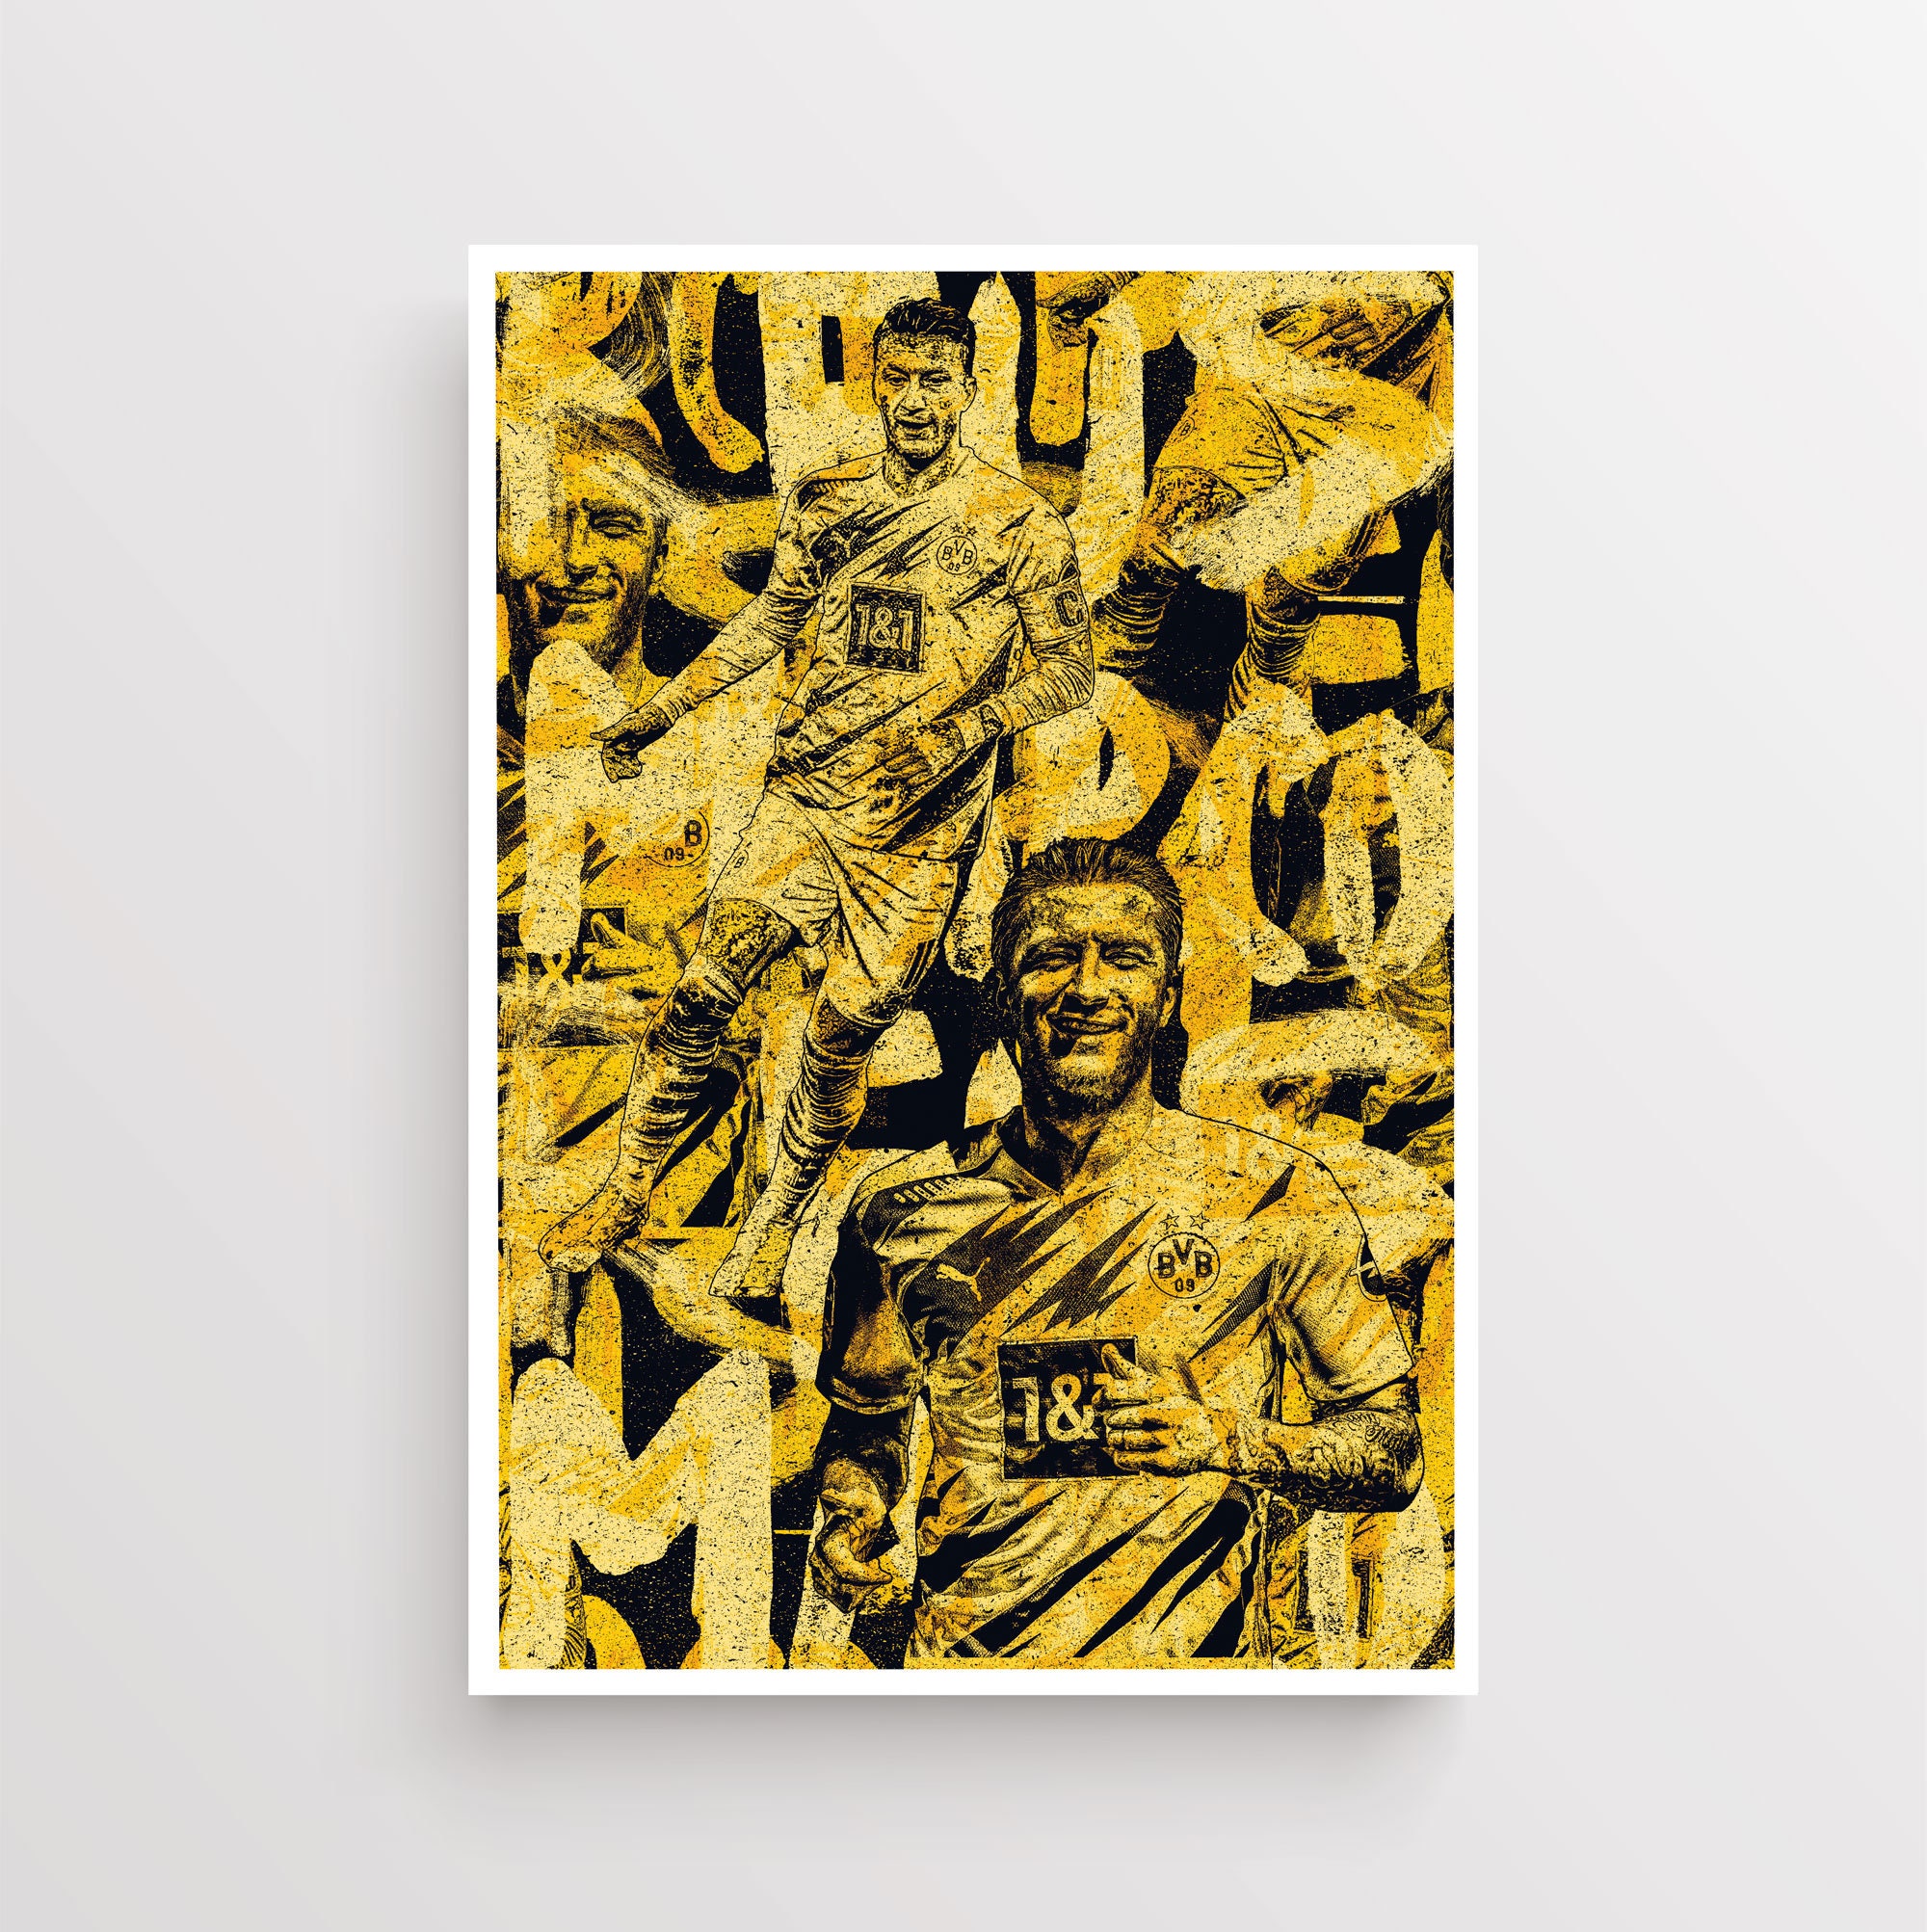 Marco Reus Borussia Dortmund FC Art Poster Photo Print Decor FIFA Soccer Football Fan Artwork 297×420 mm 11,7×16,5 inches A3 Size 